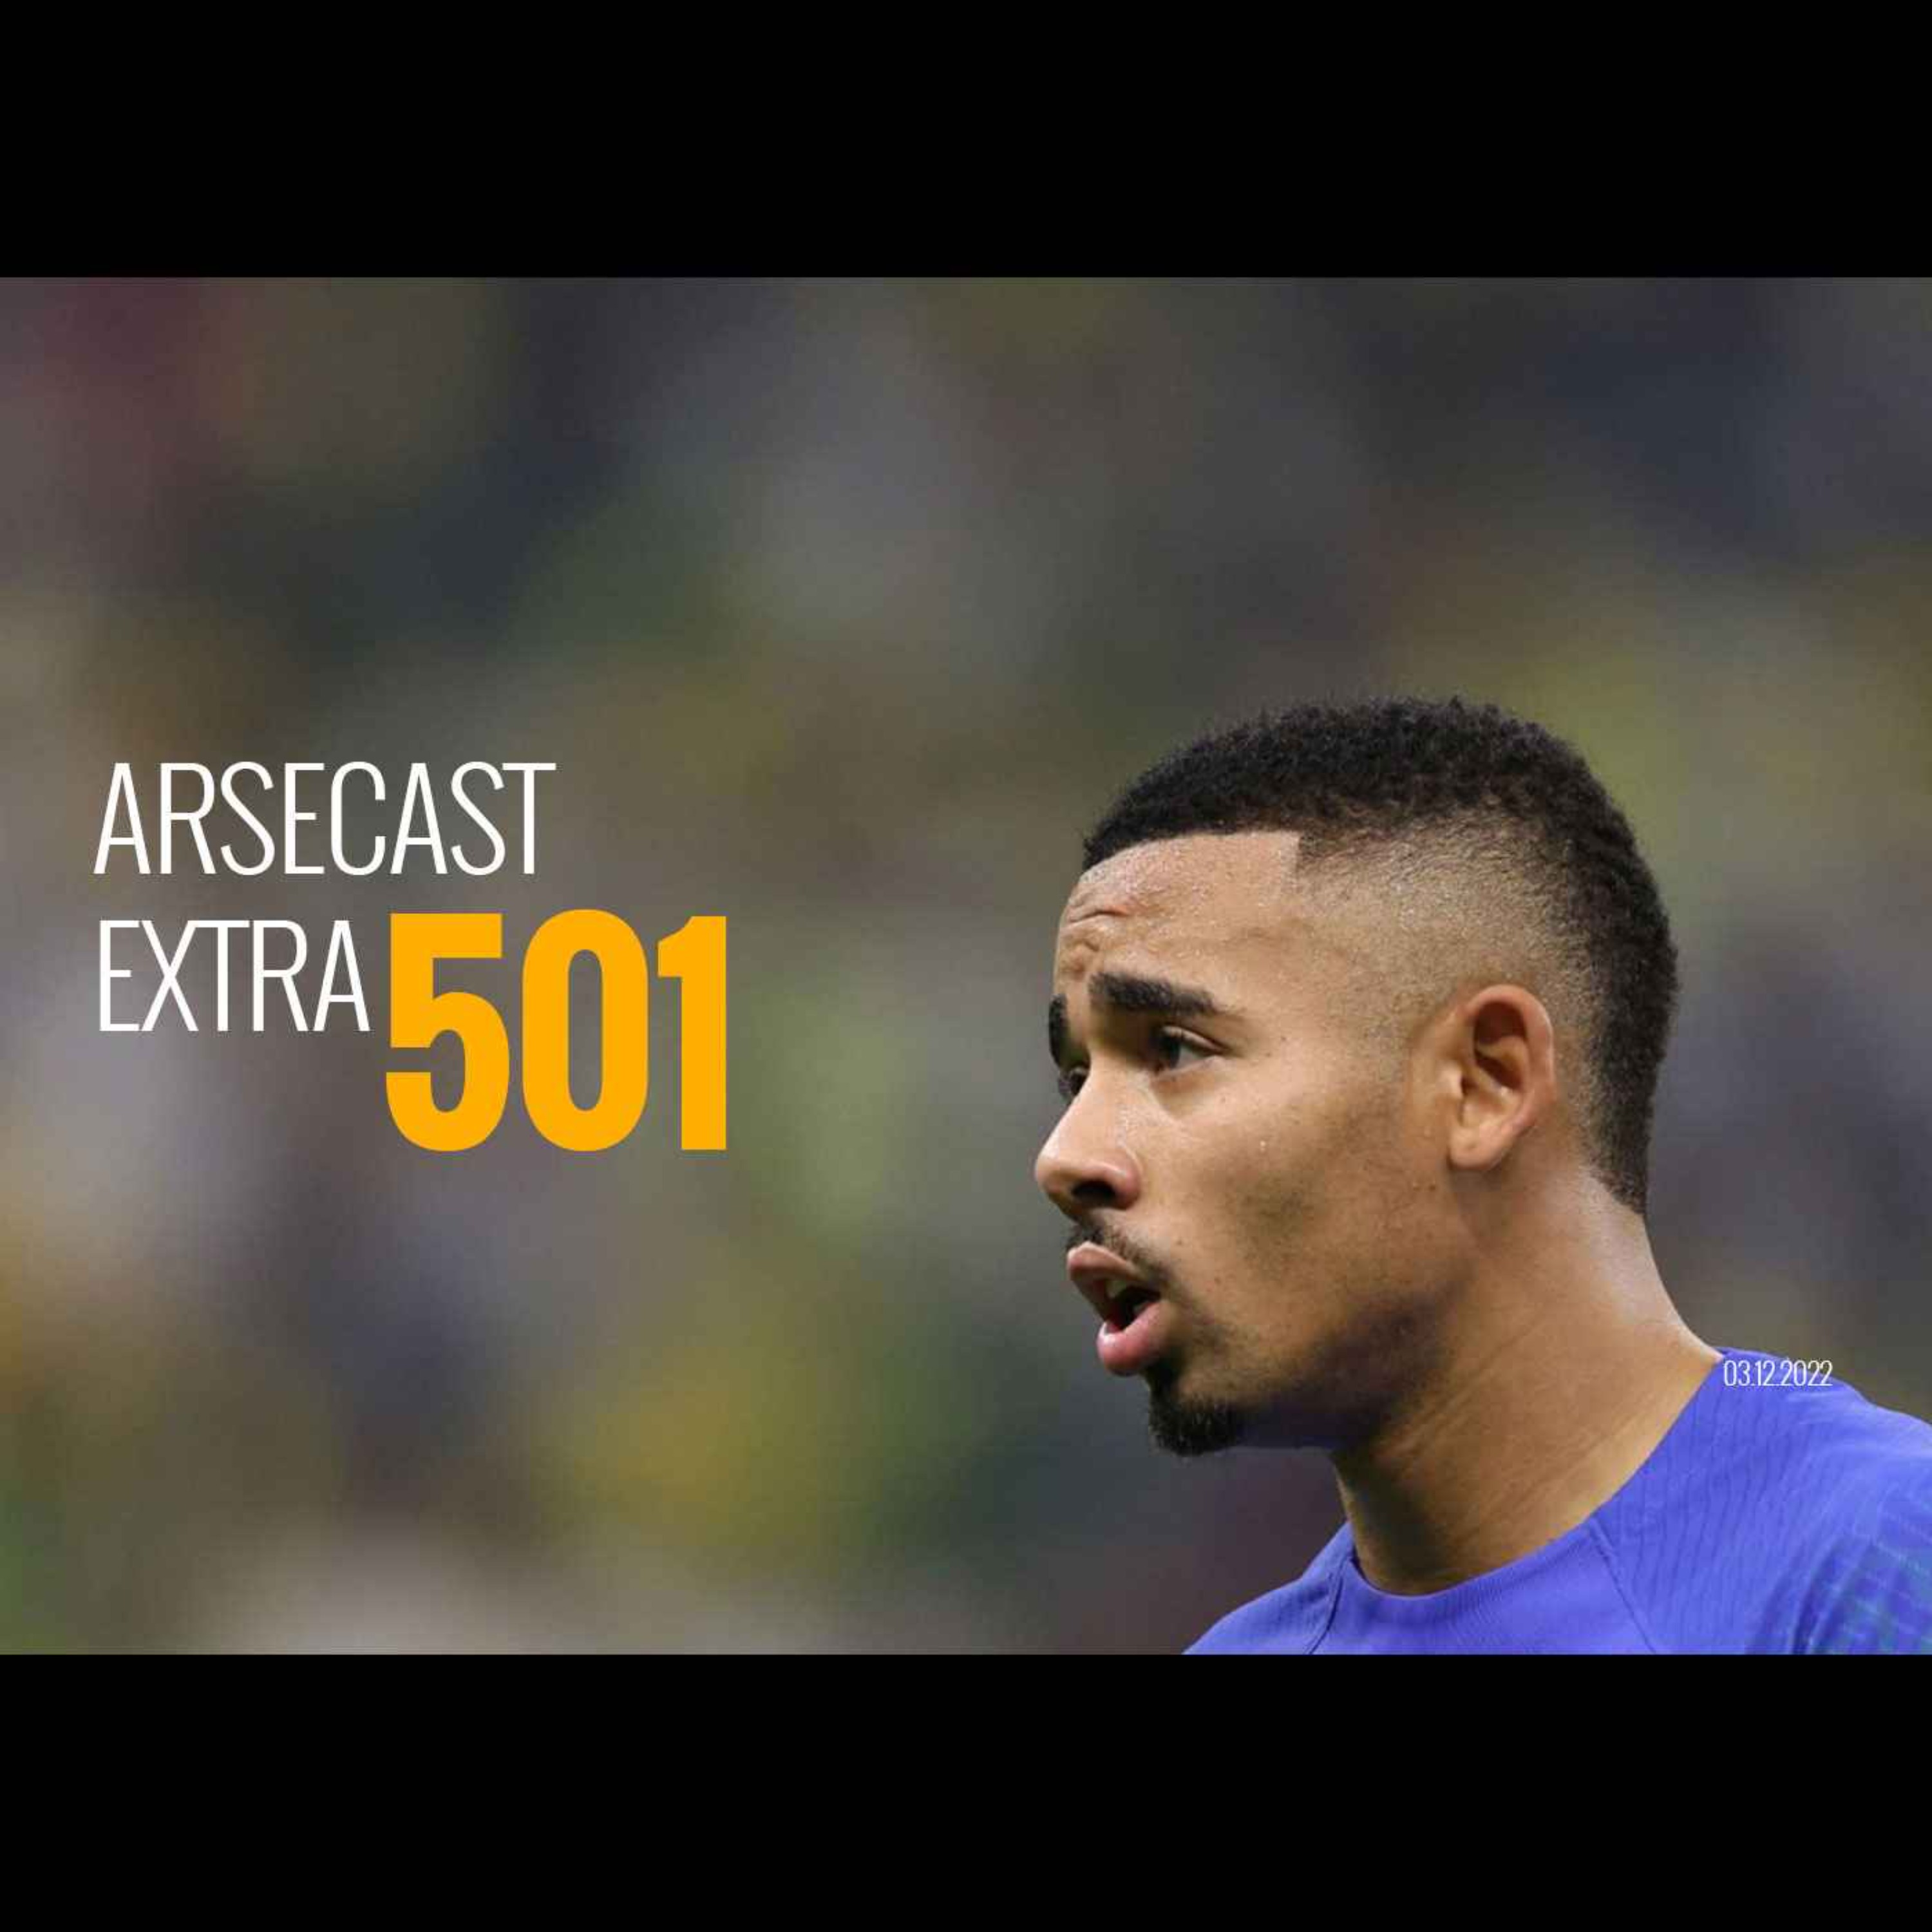 Arsecast Extra Episode 501 - 03.12.2022